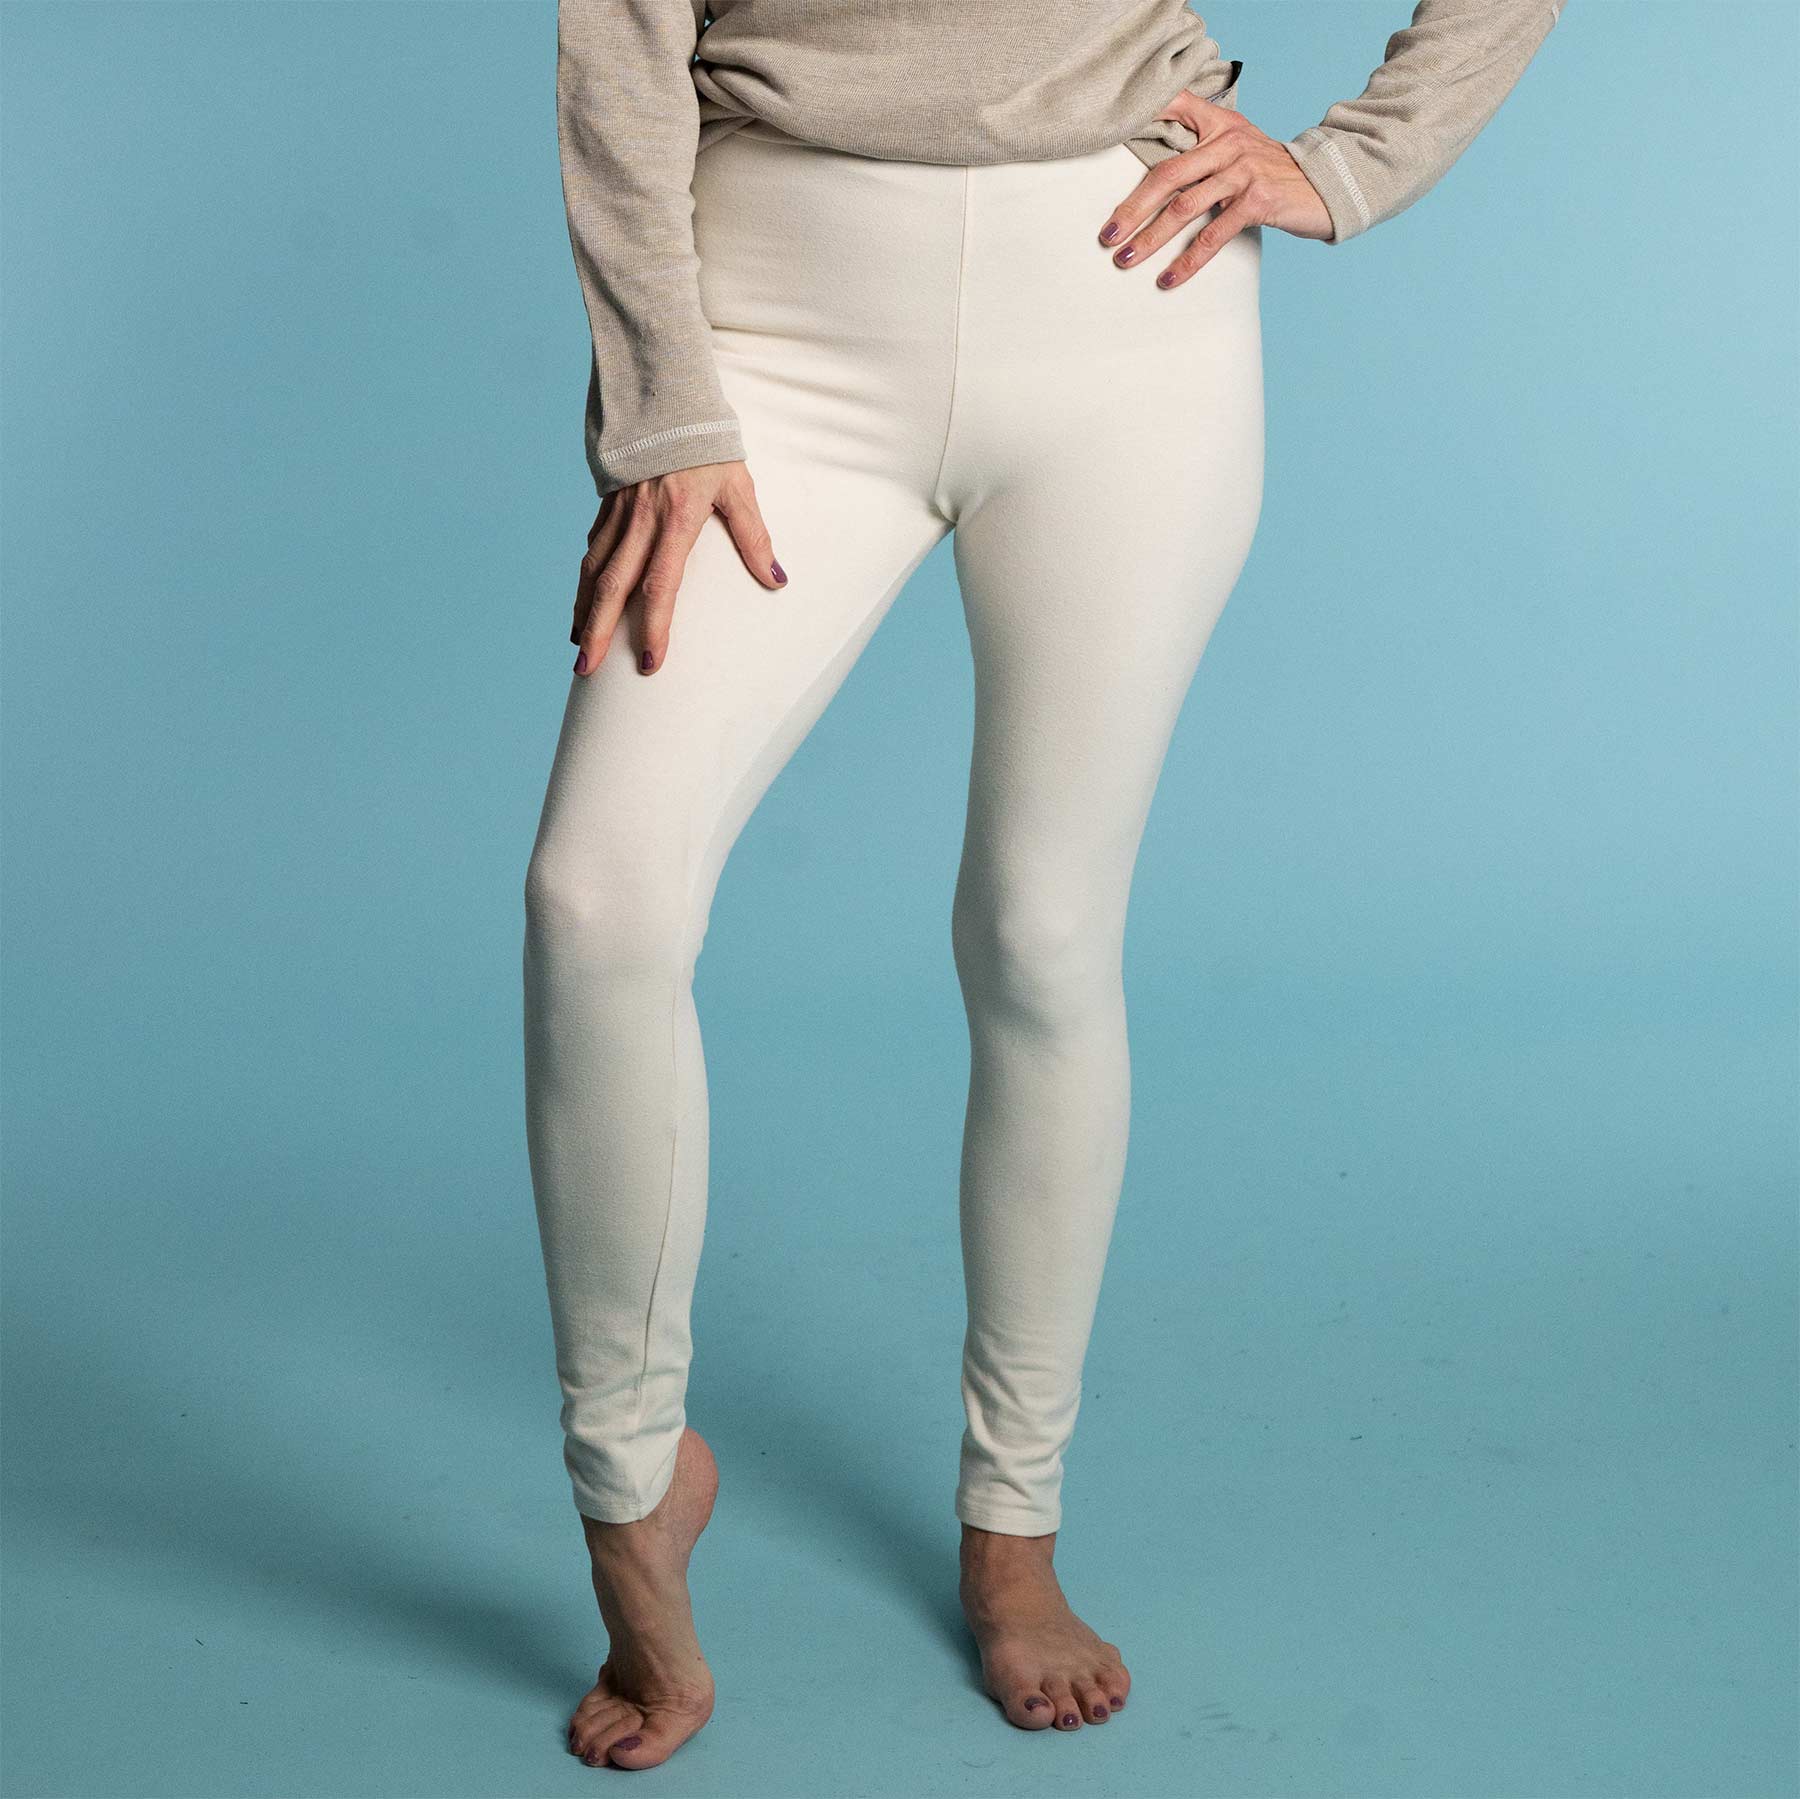 BLUENIQUE Organic Cotton Legging Pants (Made in USA)